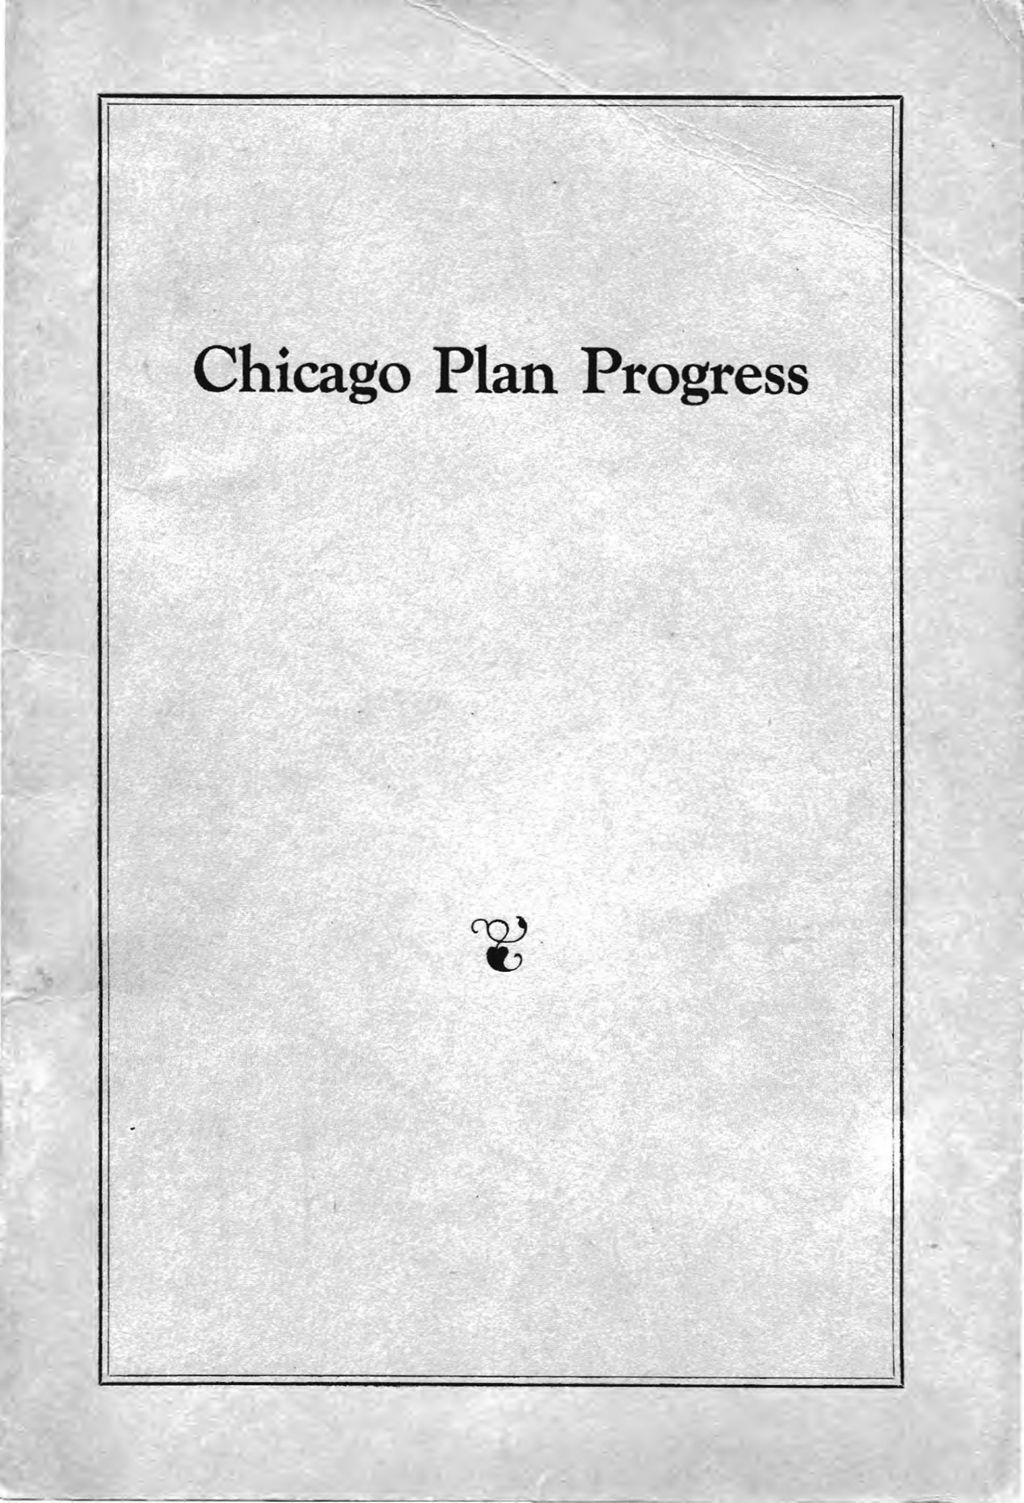 Chicago Plan Progress, Chicago Plan Commission, 1927.